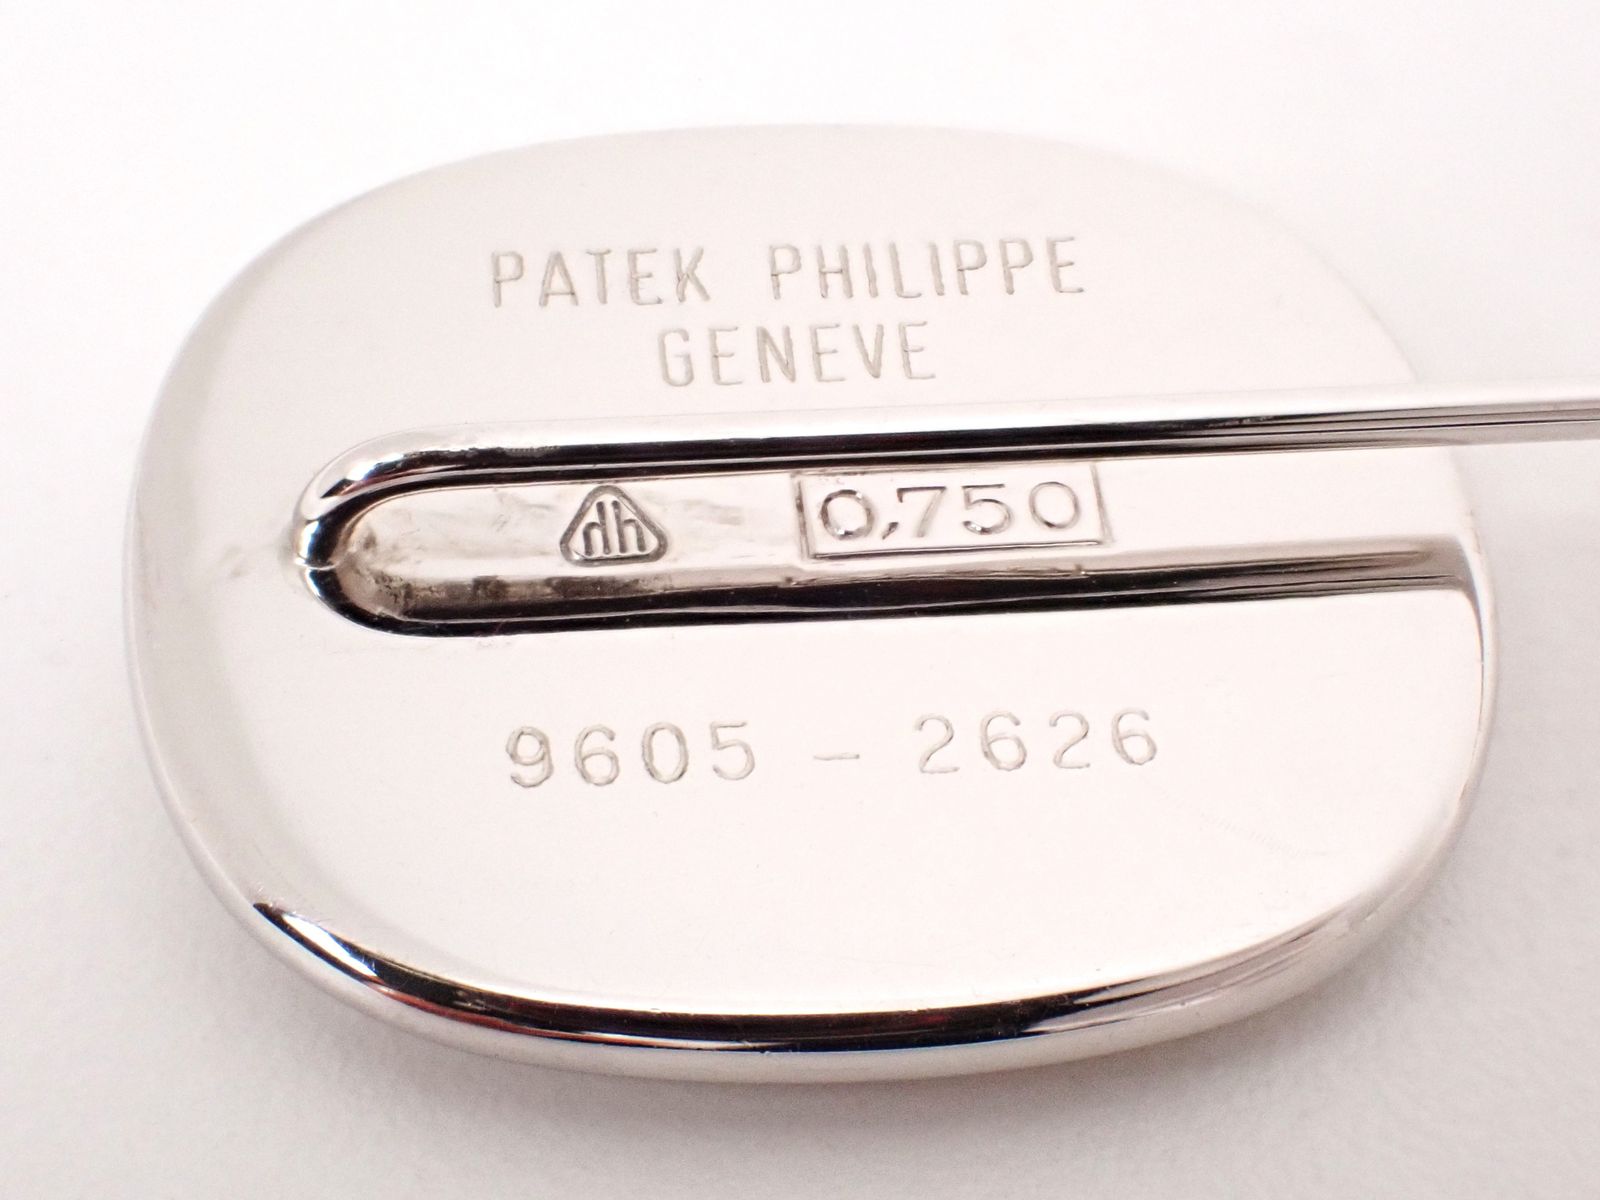 Patek Philippe(パテックフィリップ) ピンブローチ K18WG 9605-2626